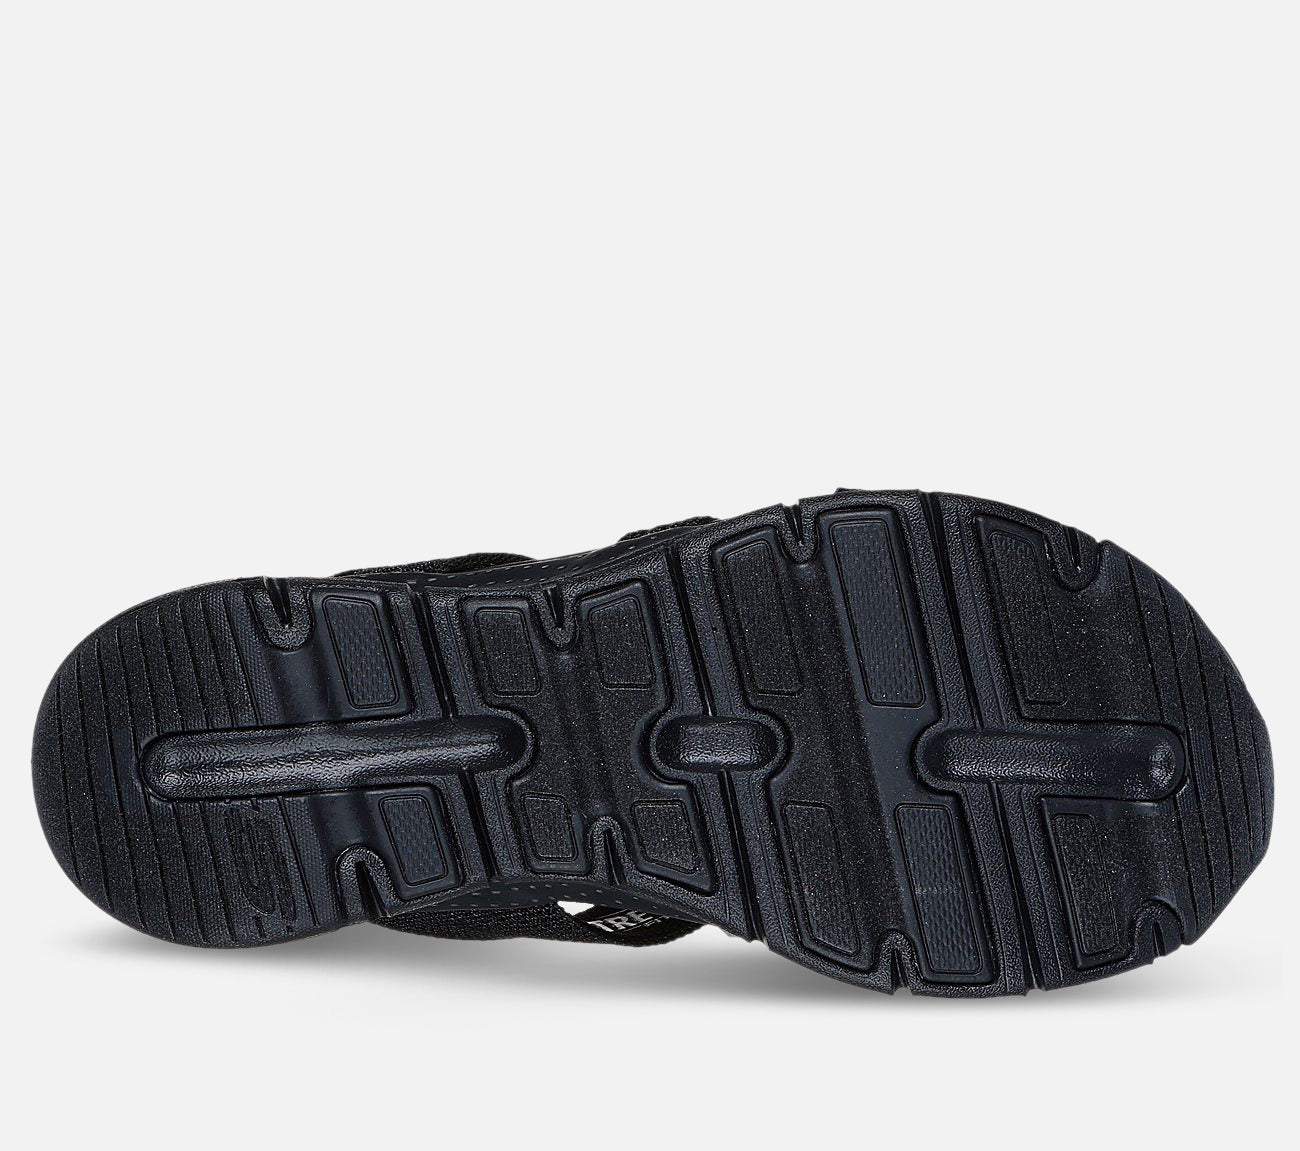 Arch Fit sandal - New Beginning Sandal Skechers